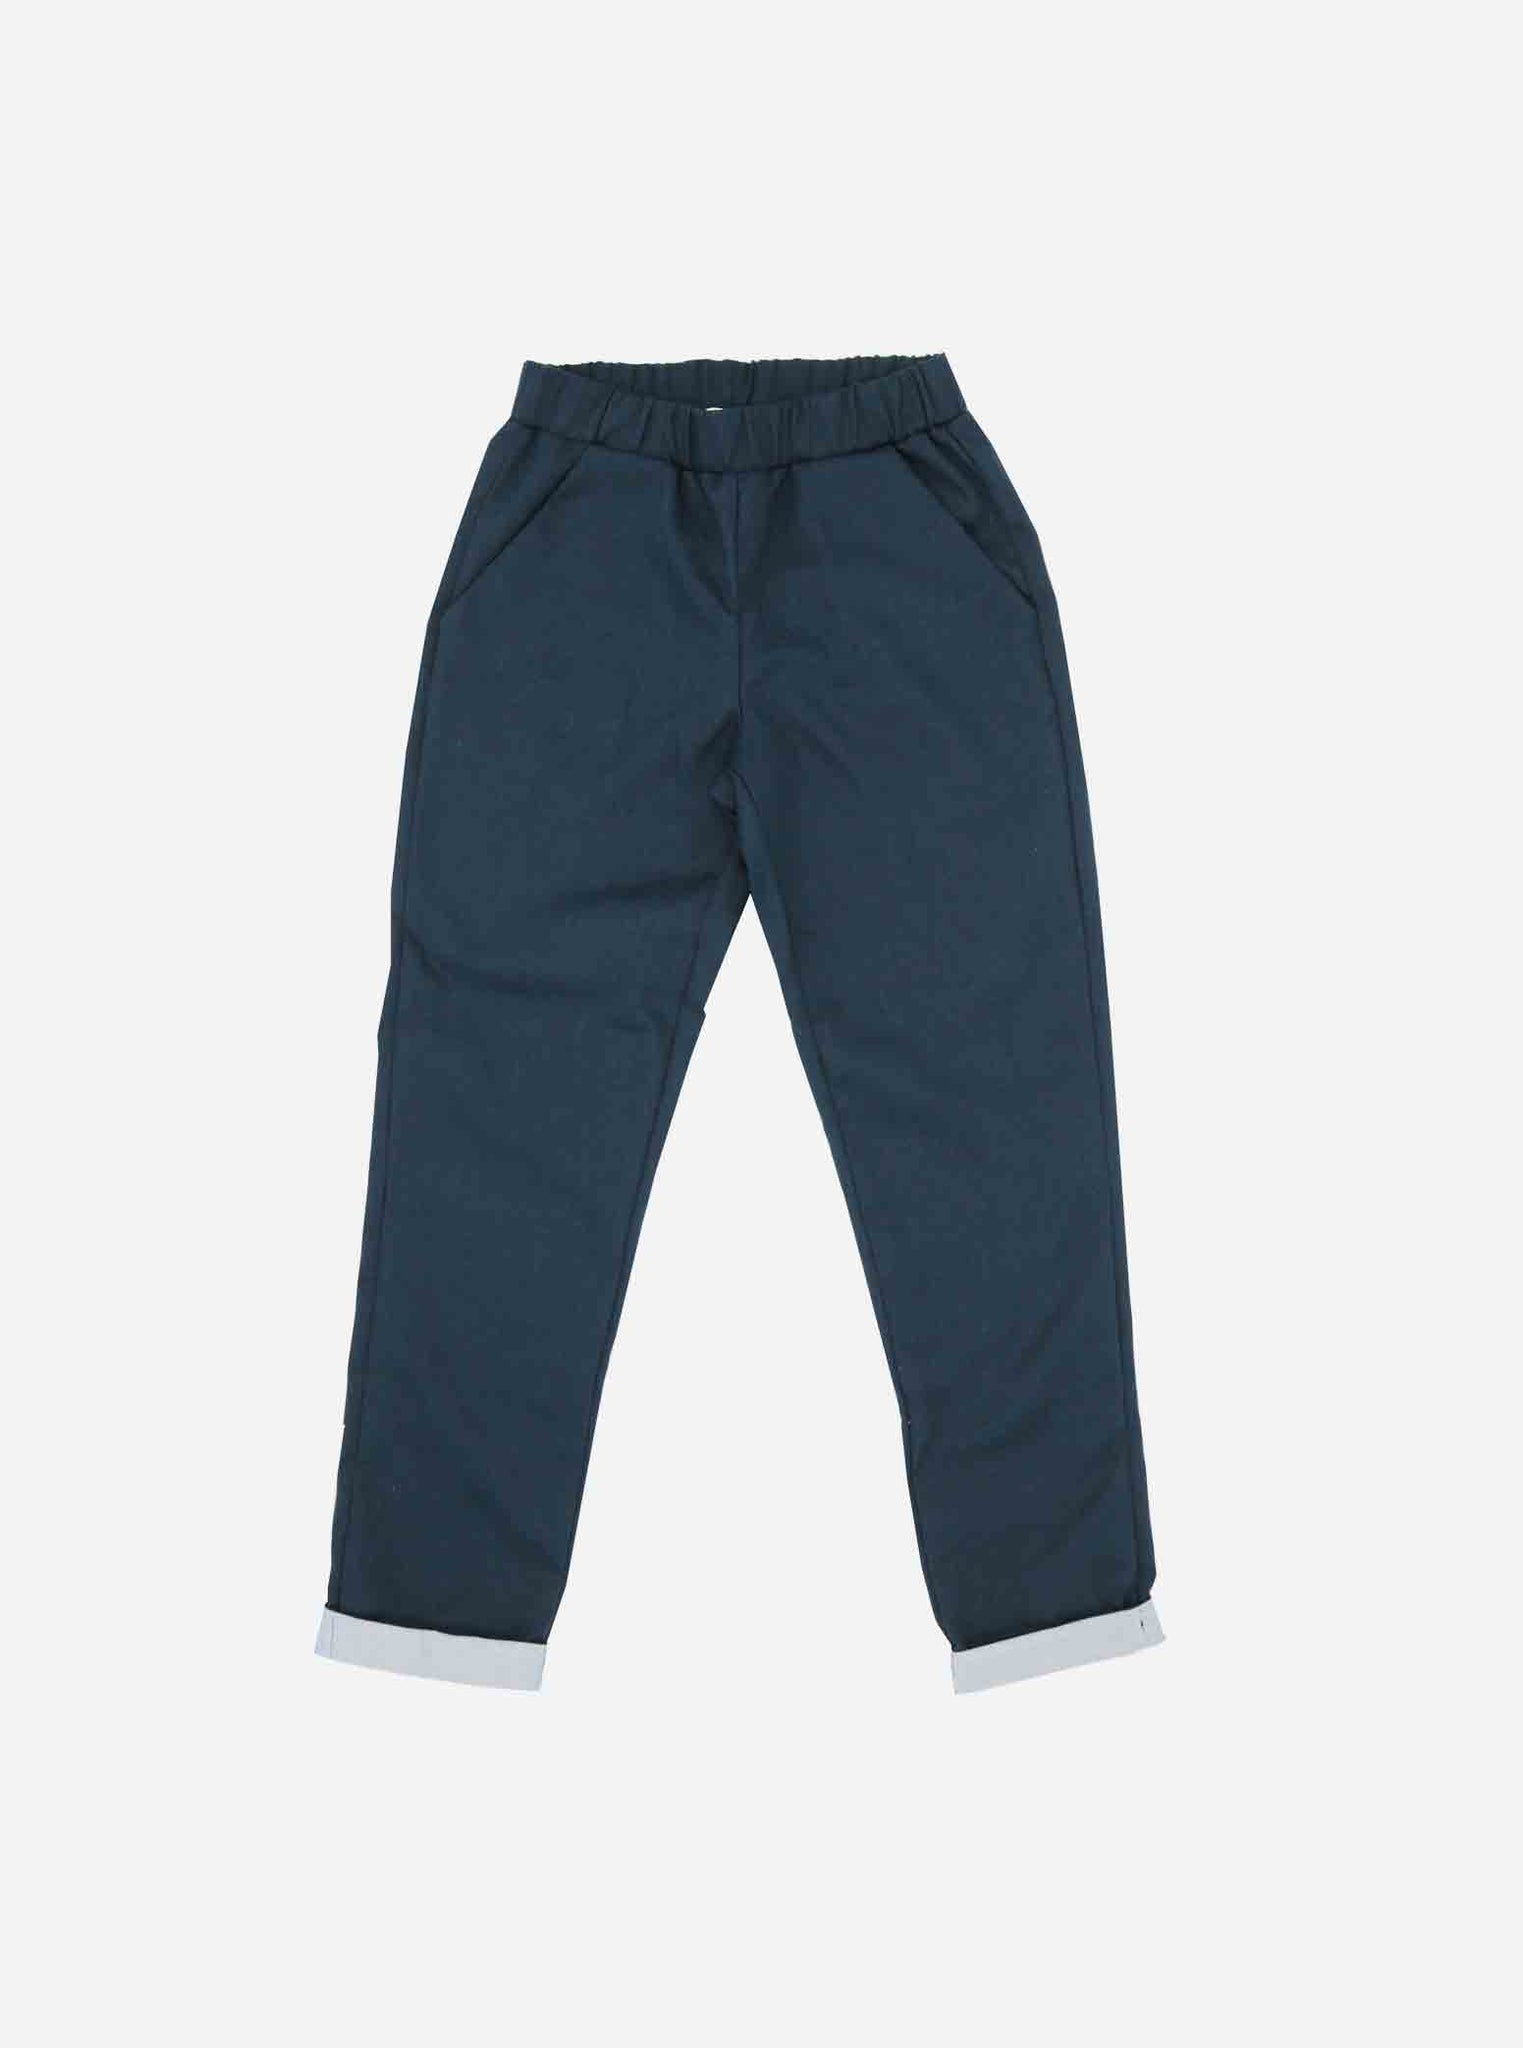 Pantalone STEFANO-OUTLET Pantaloni e Shorts-I Leoncini Shop